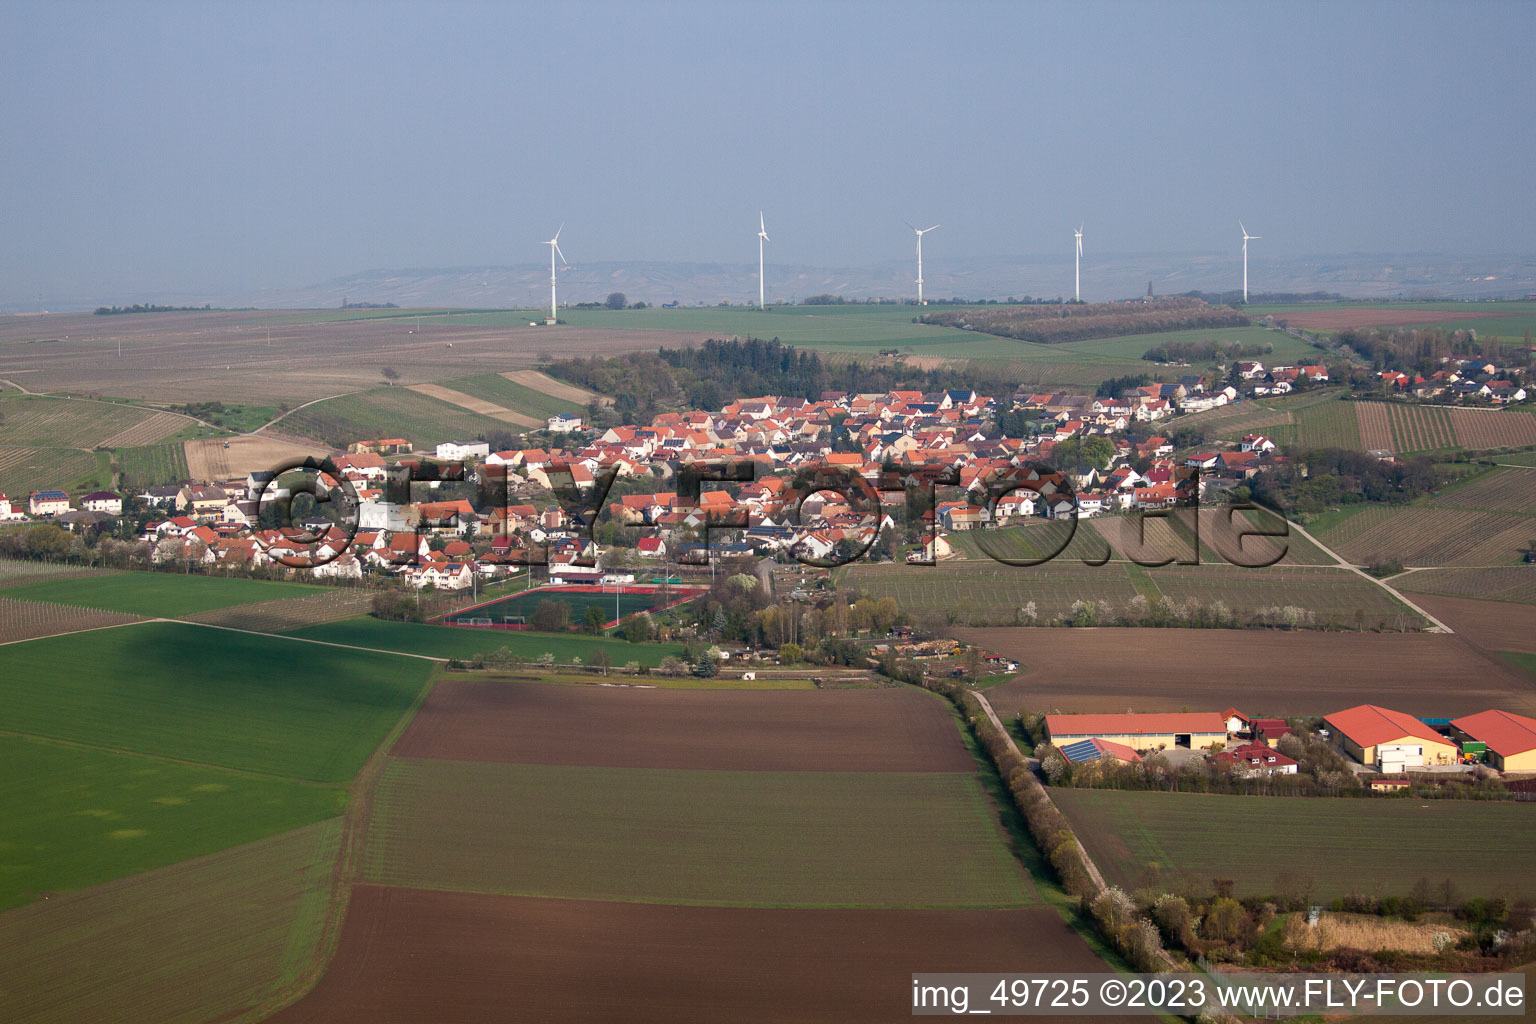 Biebelnheim in the state Rhineland-Palatinate, Germany